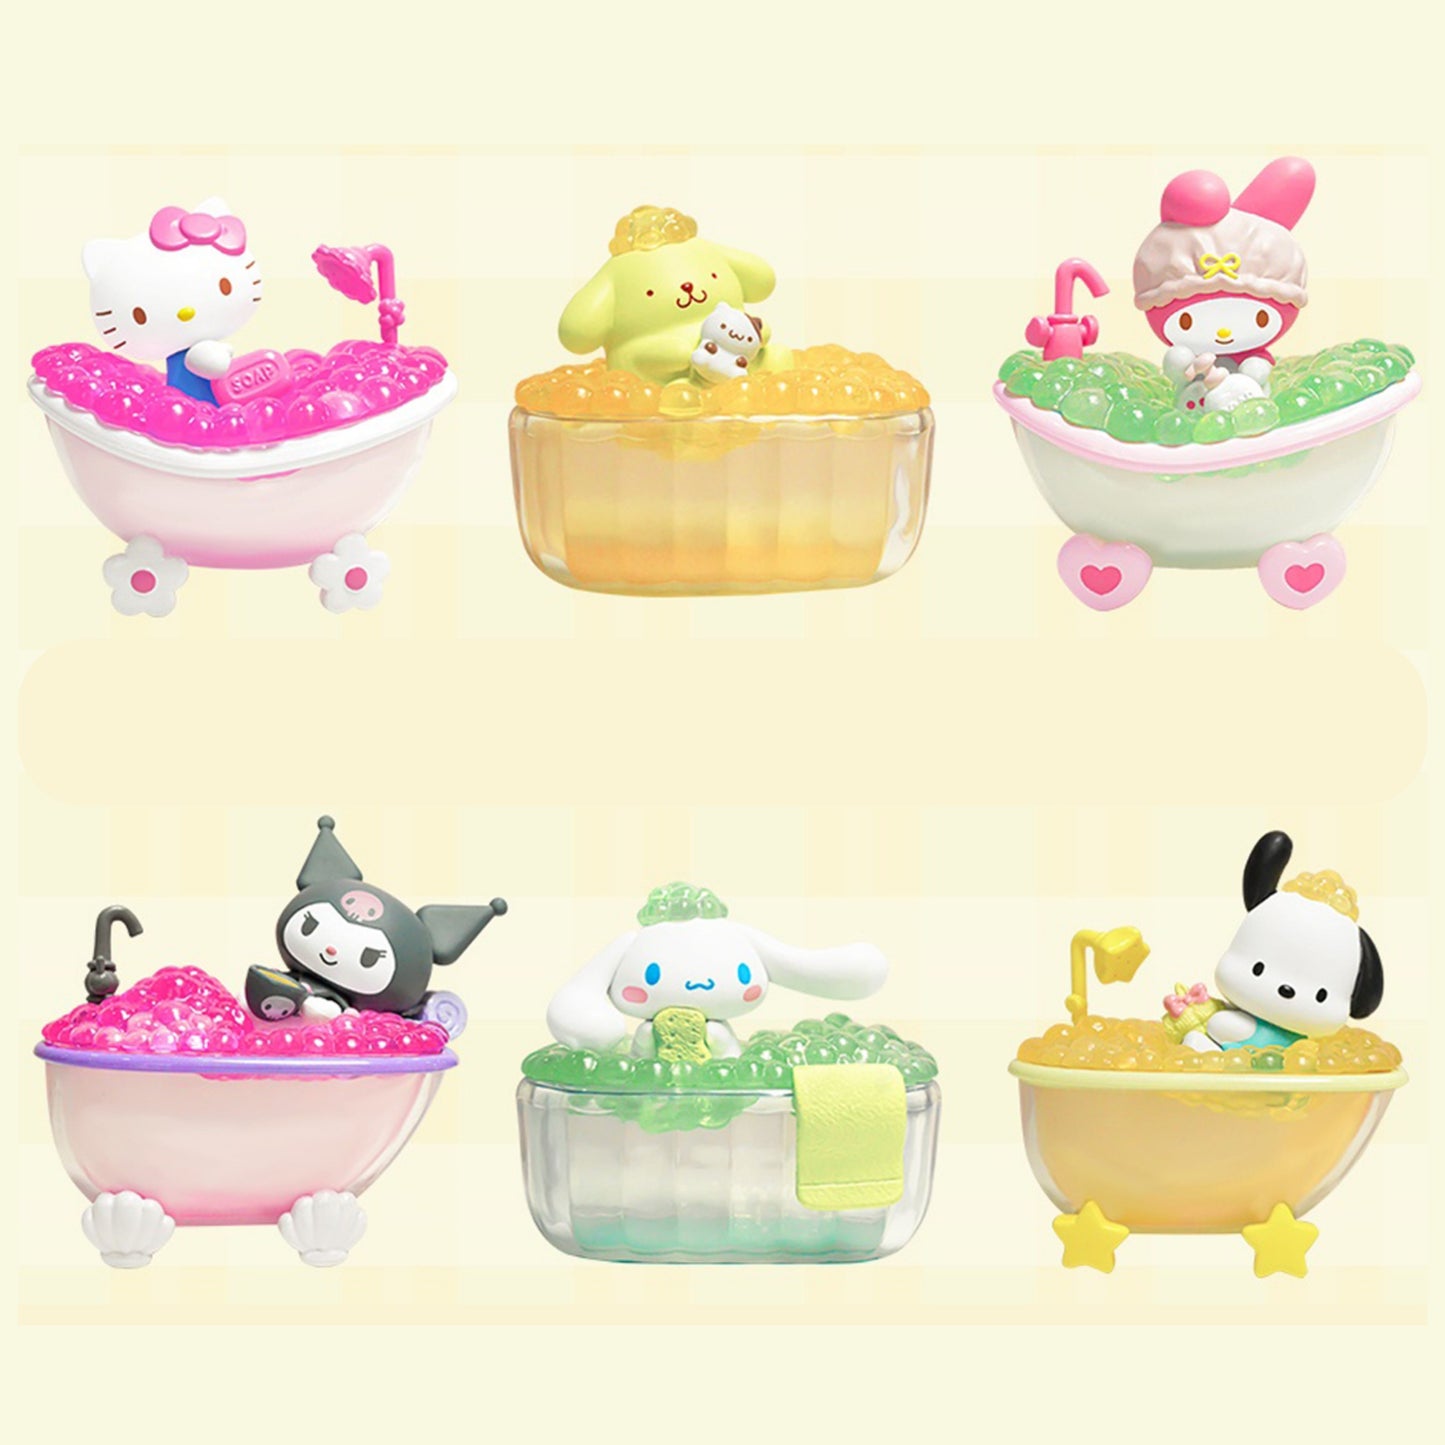 【Restock】Miniso Sanrio Characters Bubble Party Series Blind Box Random Style